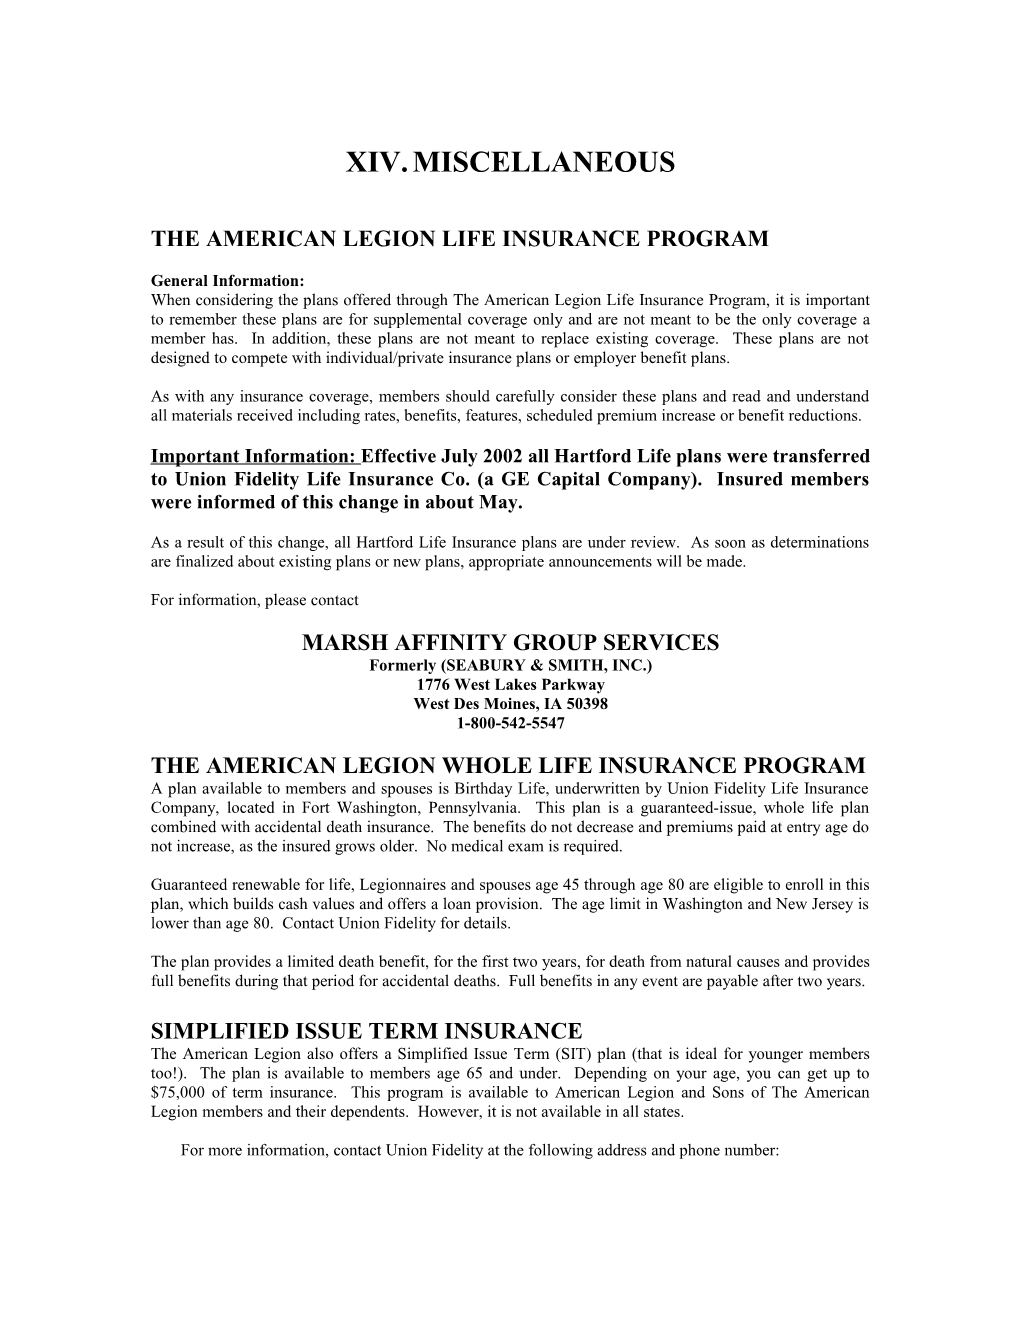 The American Legion Life Insurance Program